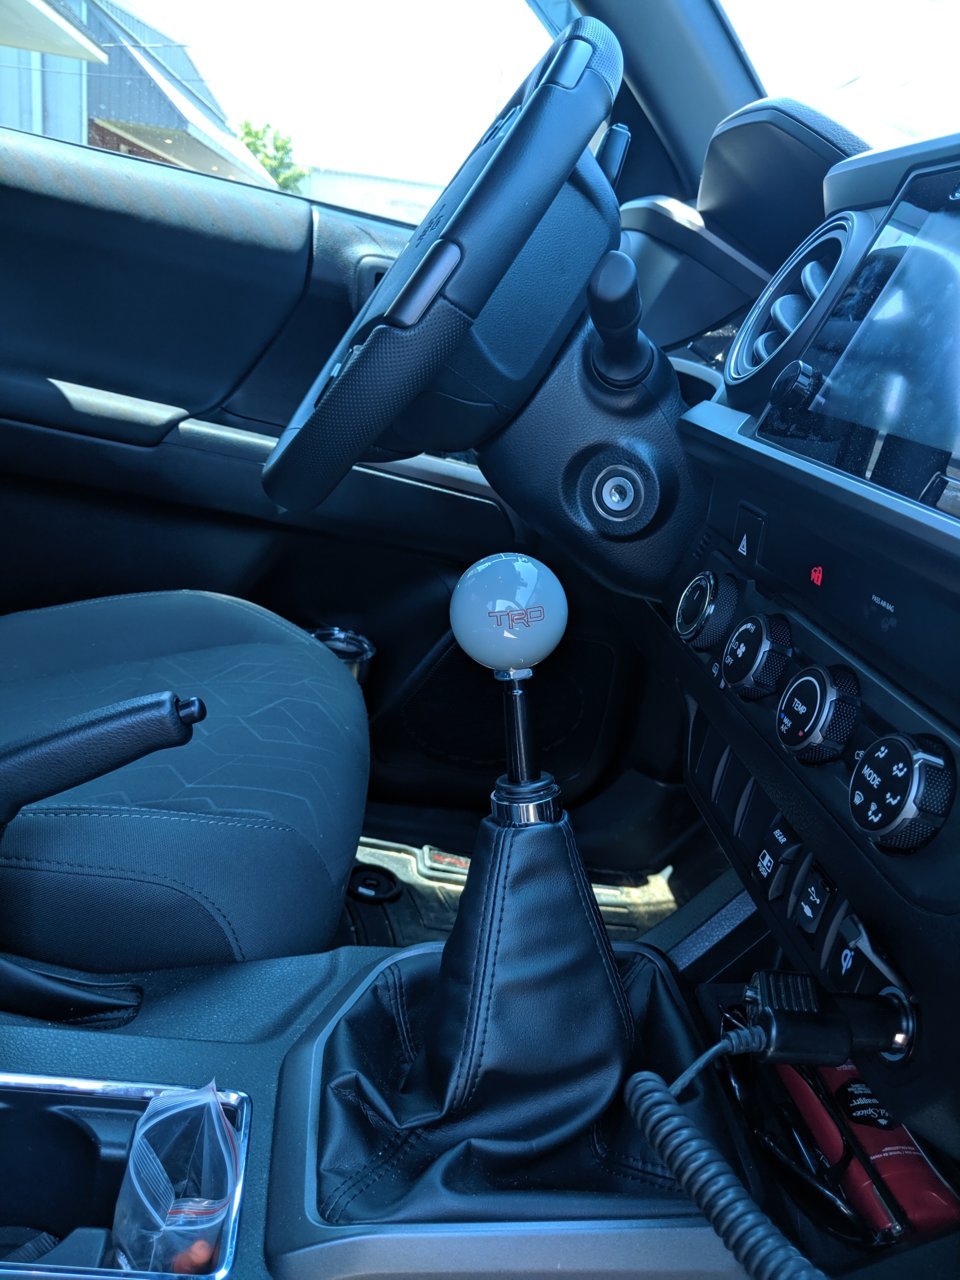 Auto Parts Accessories For Toyota Tacoma Fj Cruiser Light Blue